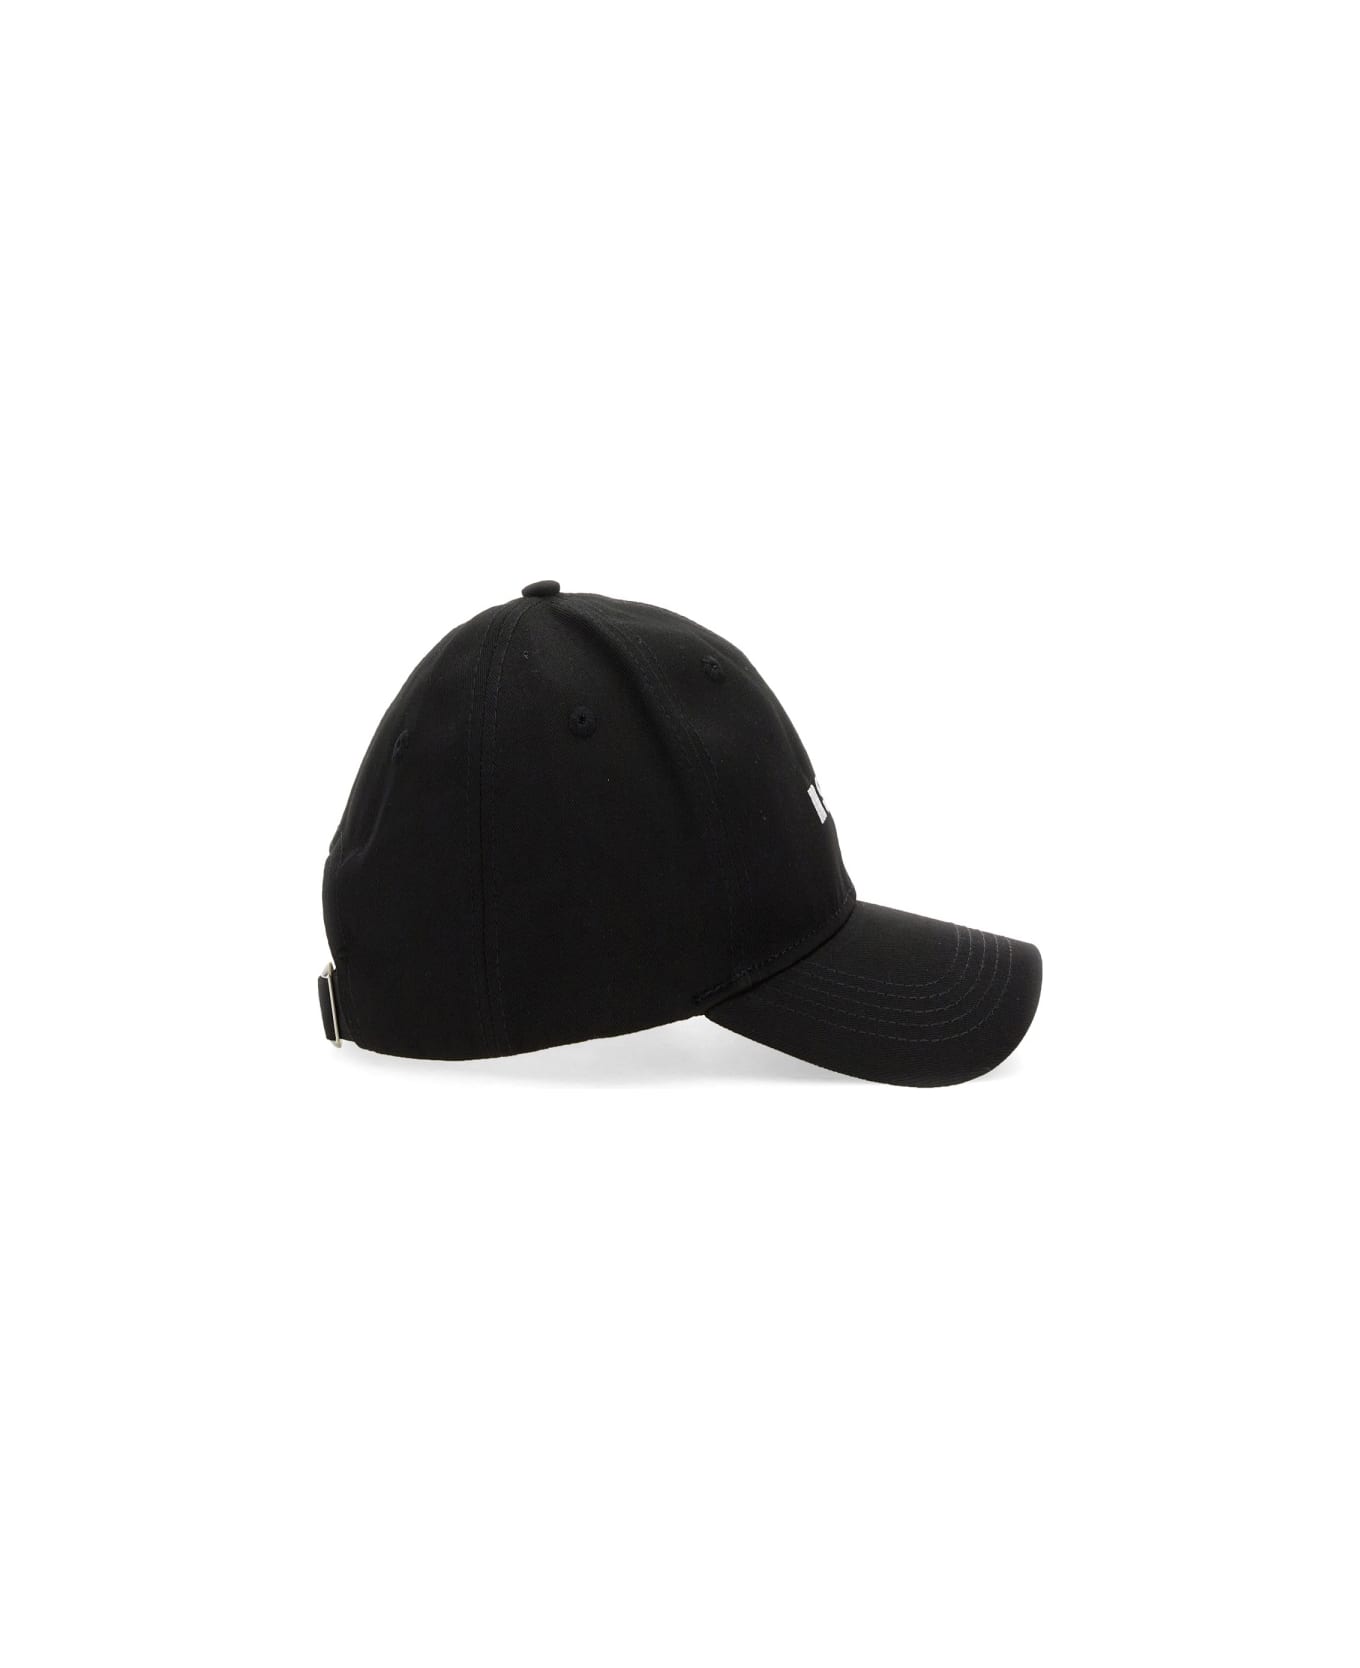 MSGM Baseball Cap - BLACK